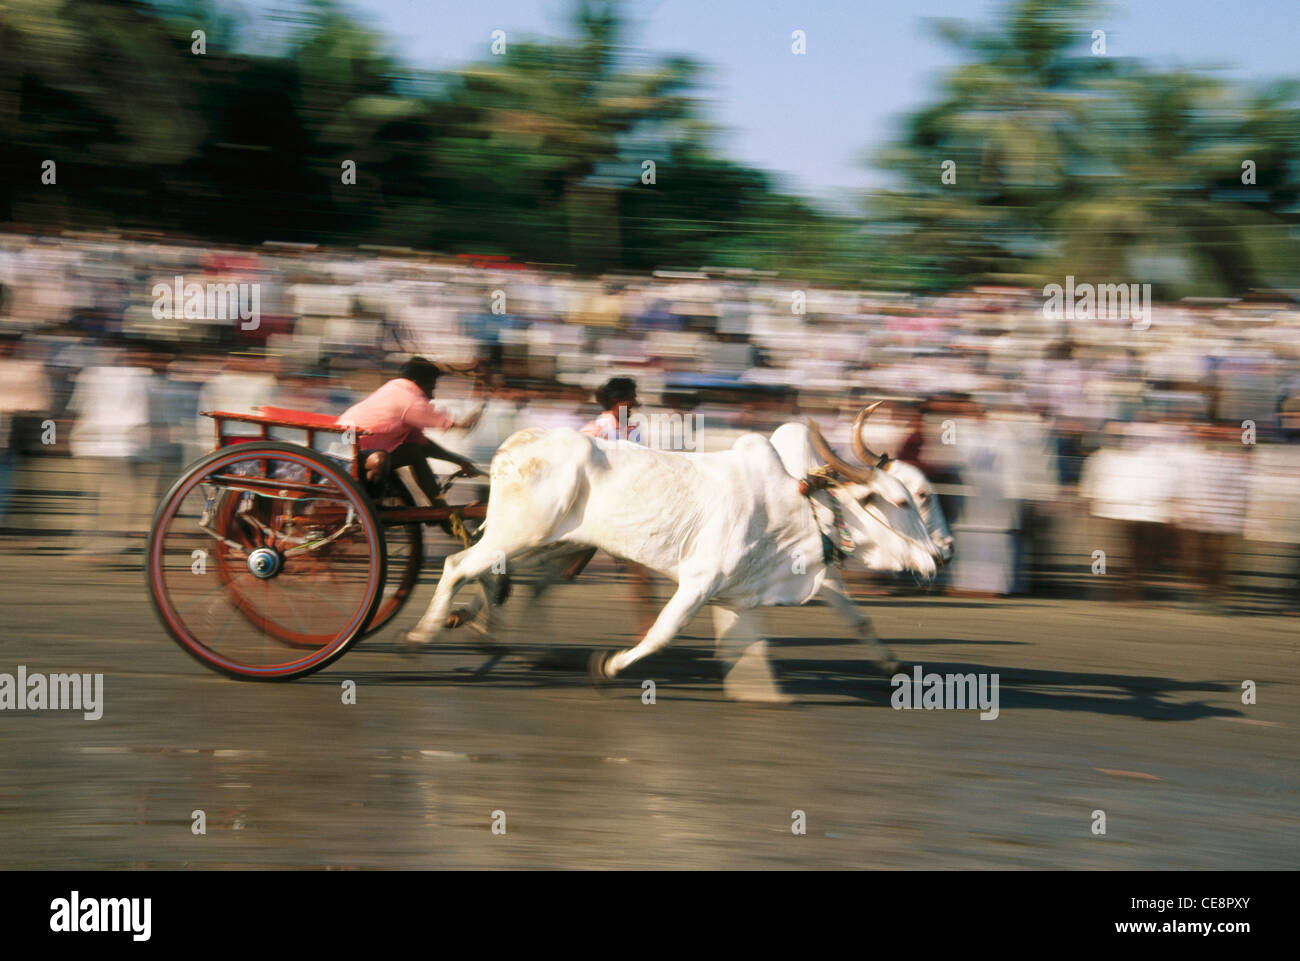 Bullock Cart Race , Plage d'Alibaug , Maharashtra , inde , asie Banque D'Images